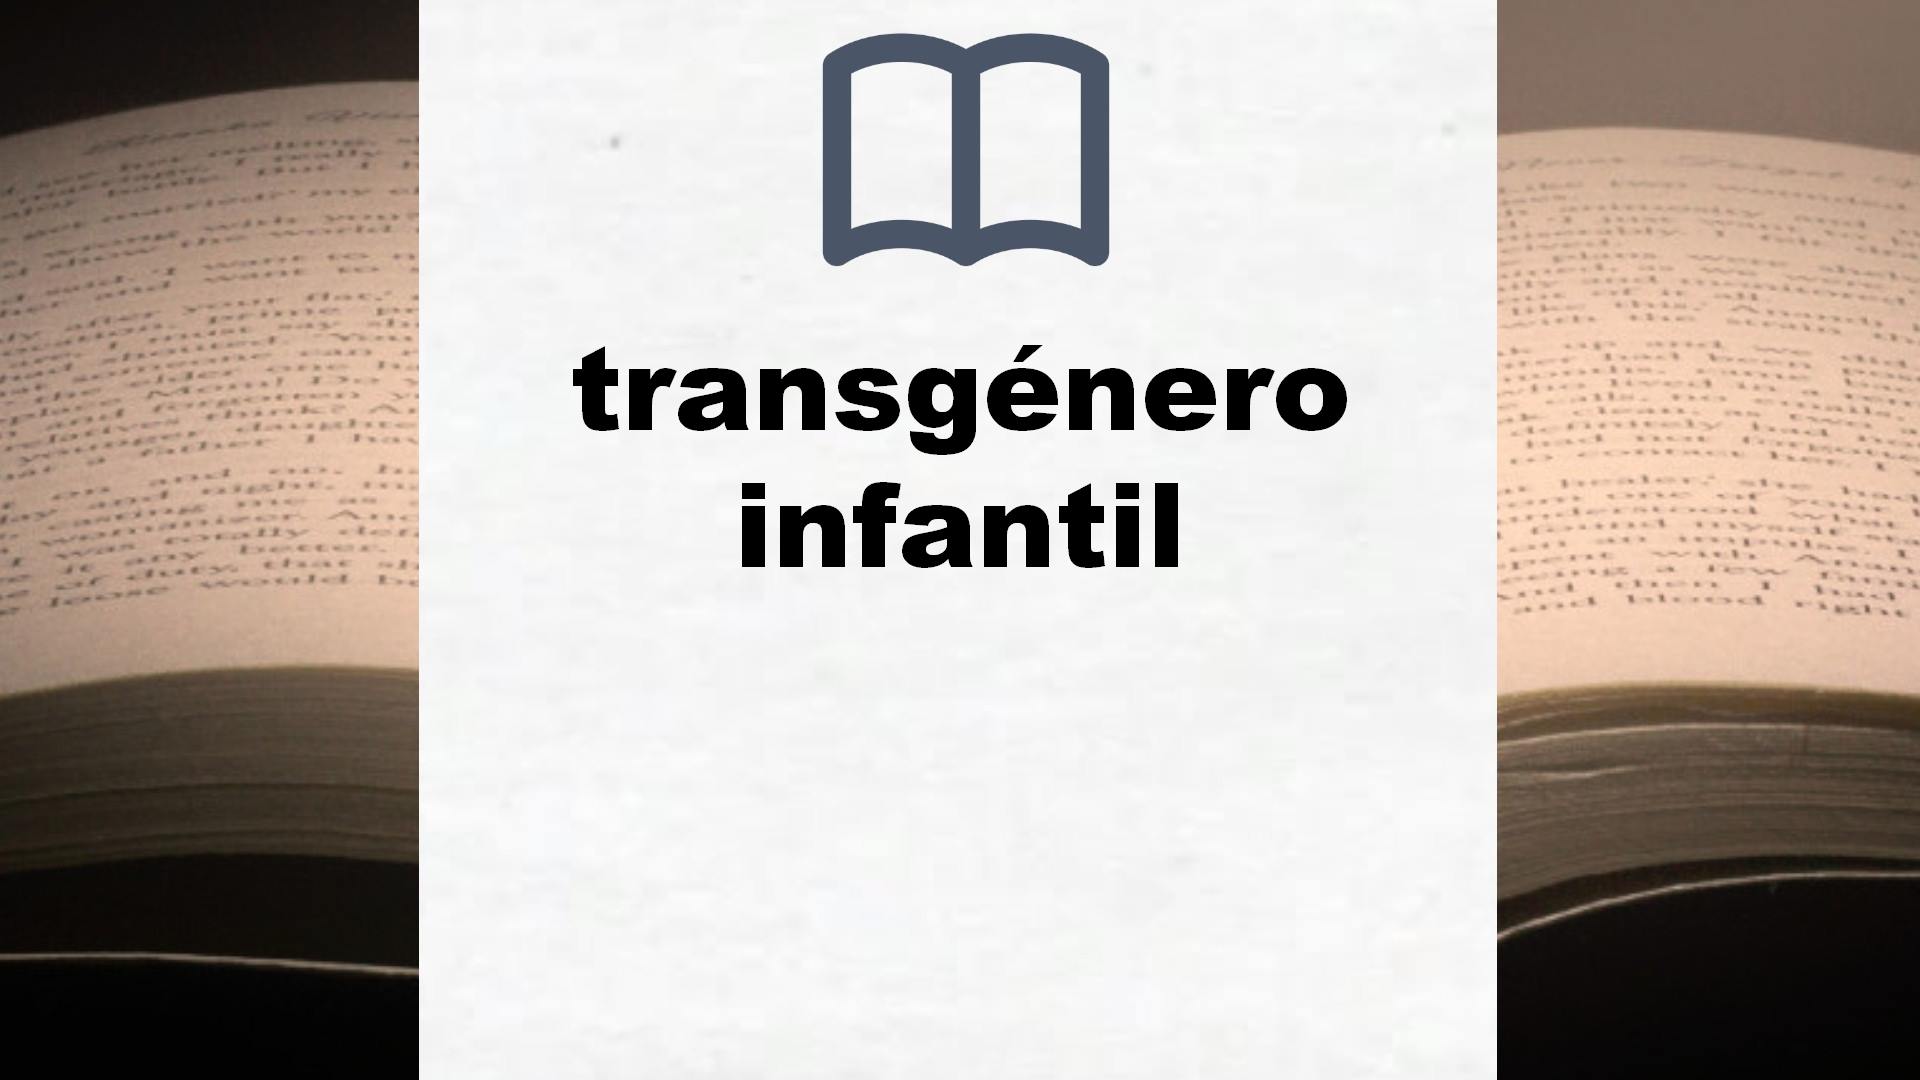 Libros sobre transgénero infantil